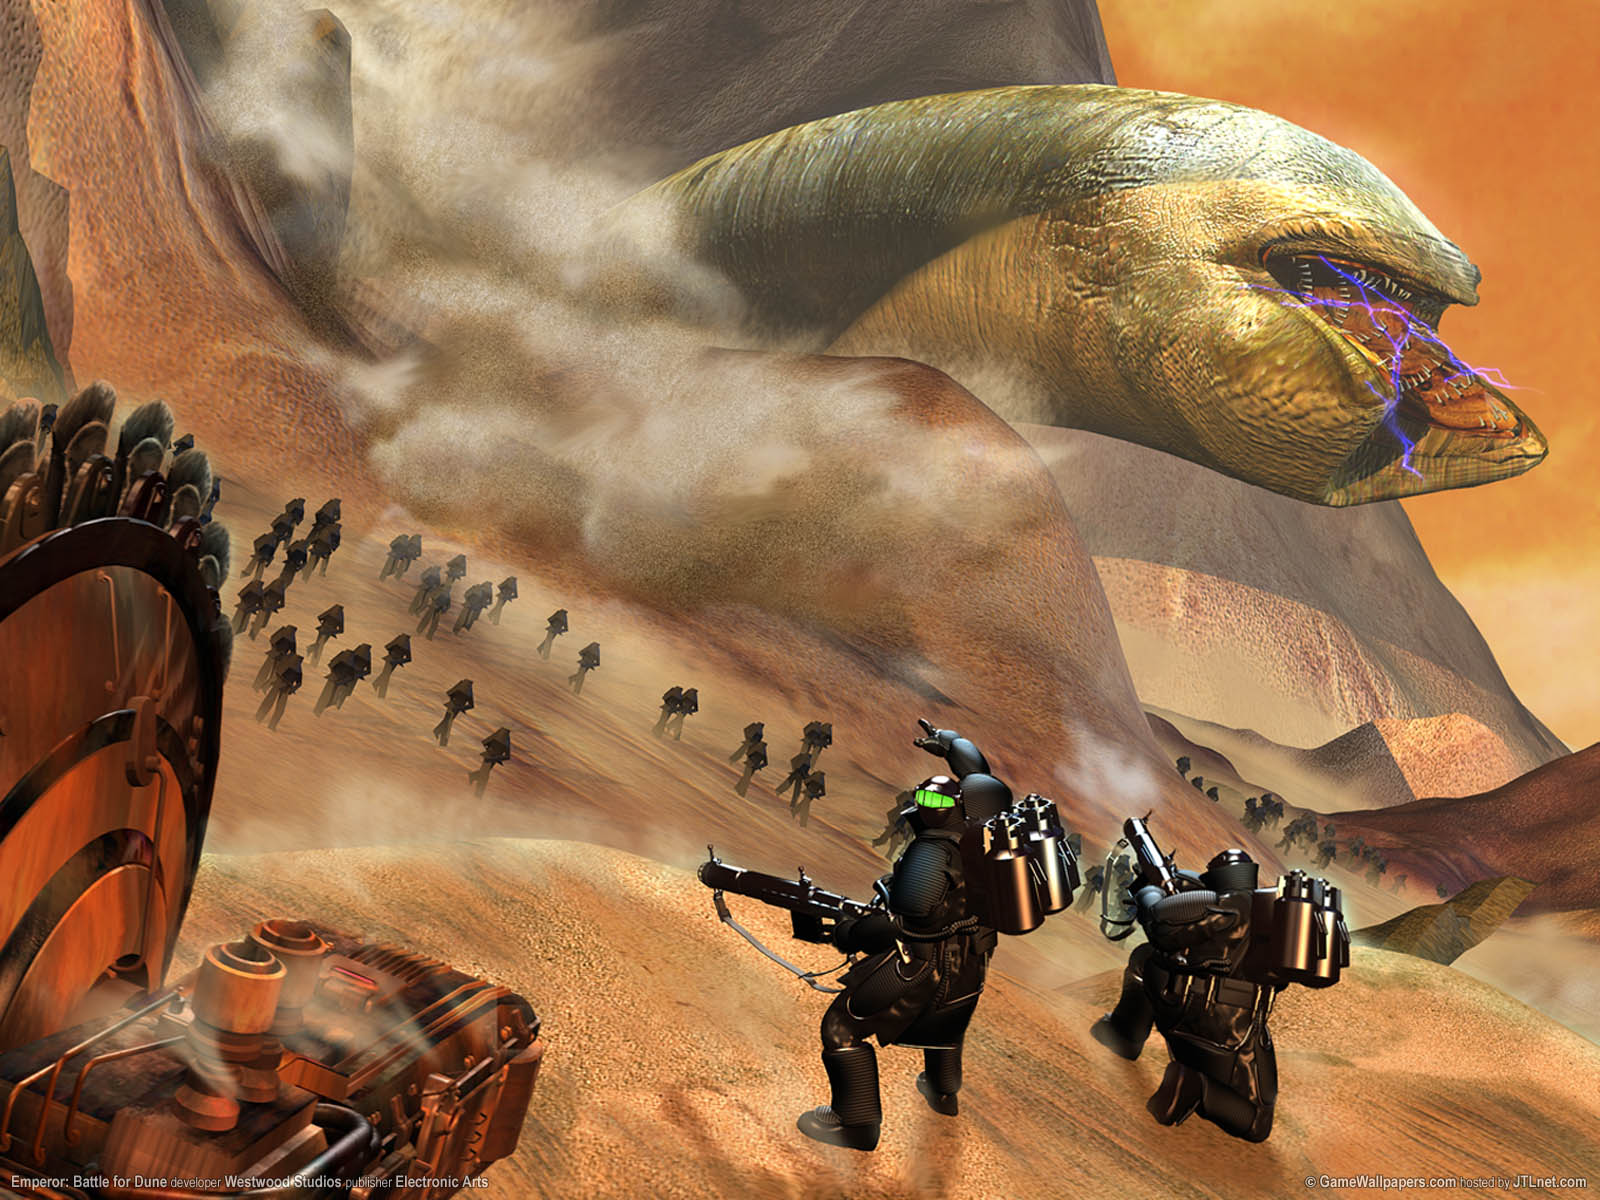 Emperor%3A Battle for Dune achtergrond 07 1600x1200